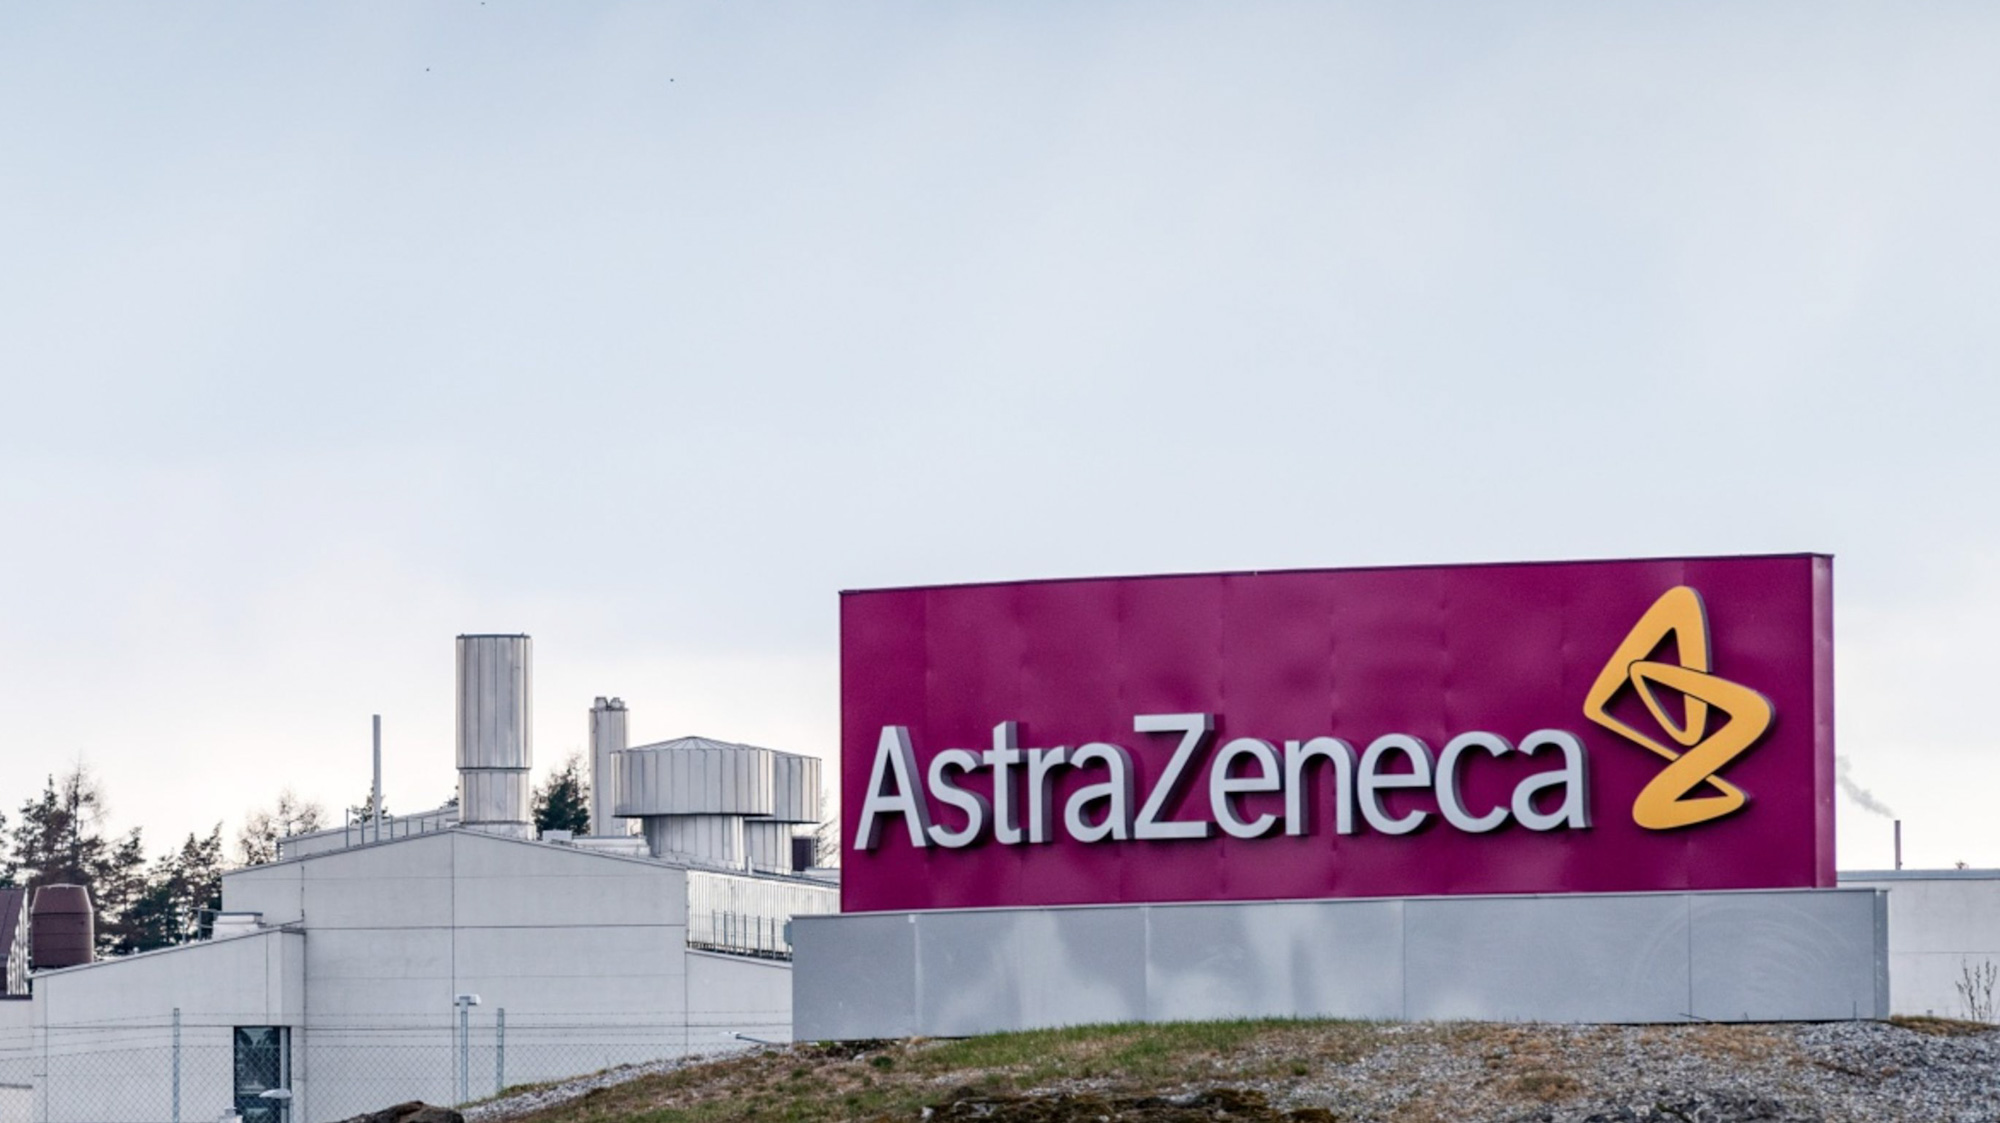 AstraZeneca: Προστατεύει το περιβάλλον με πράξεις